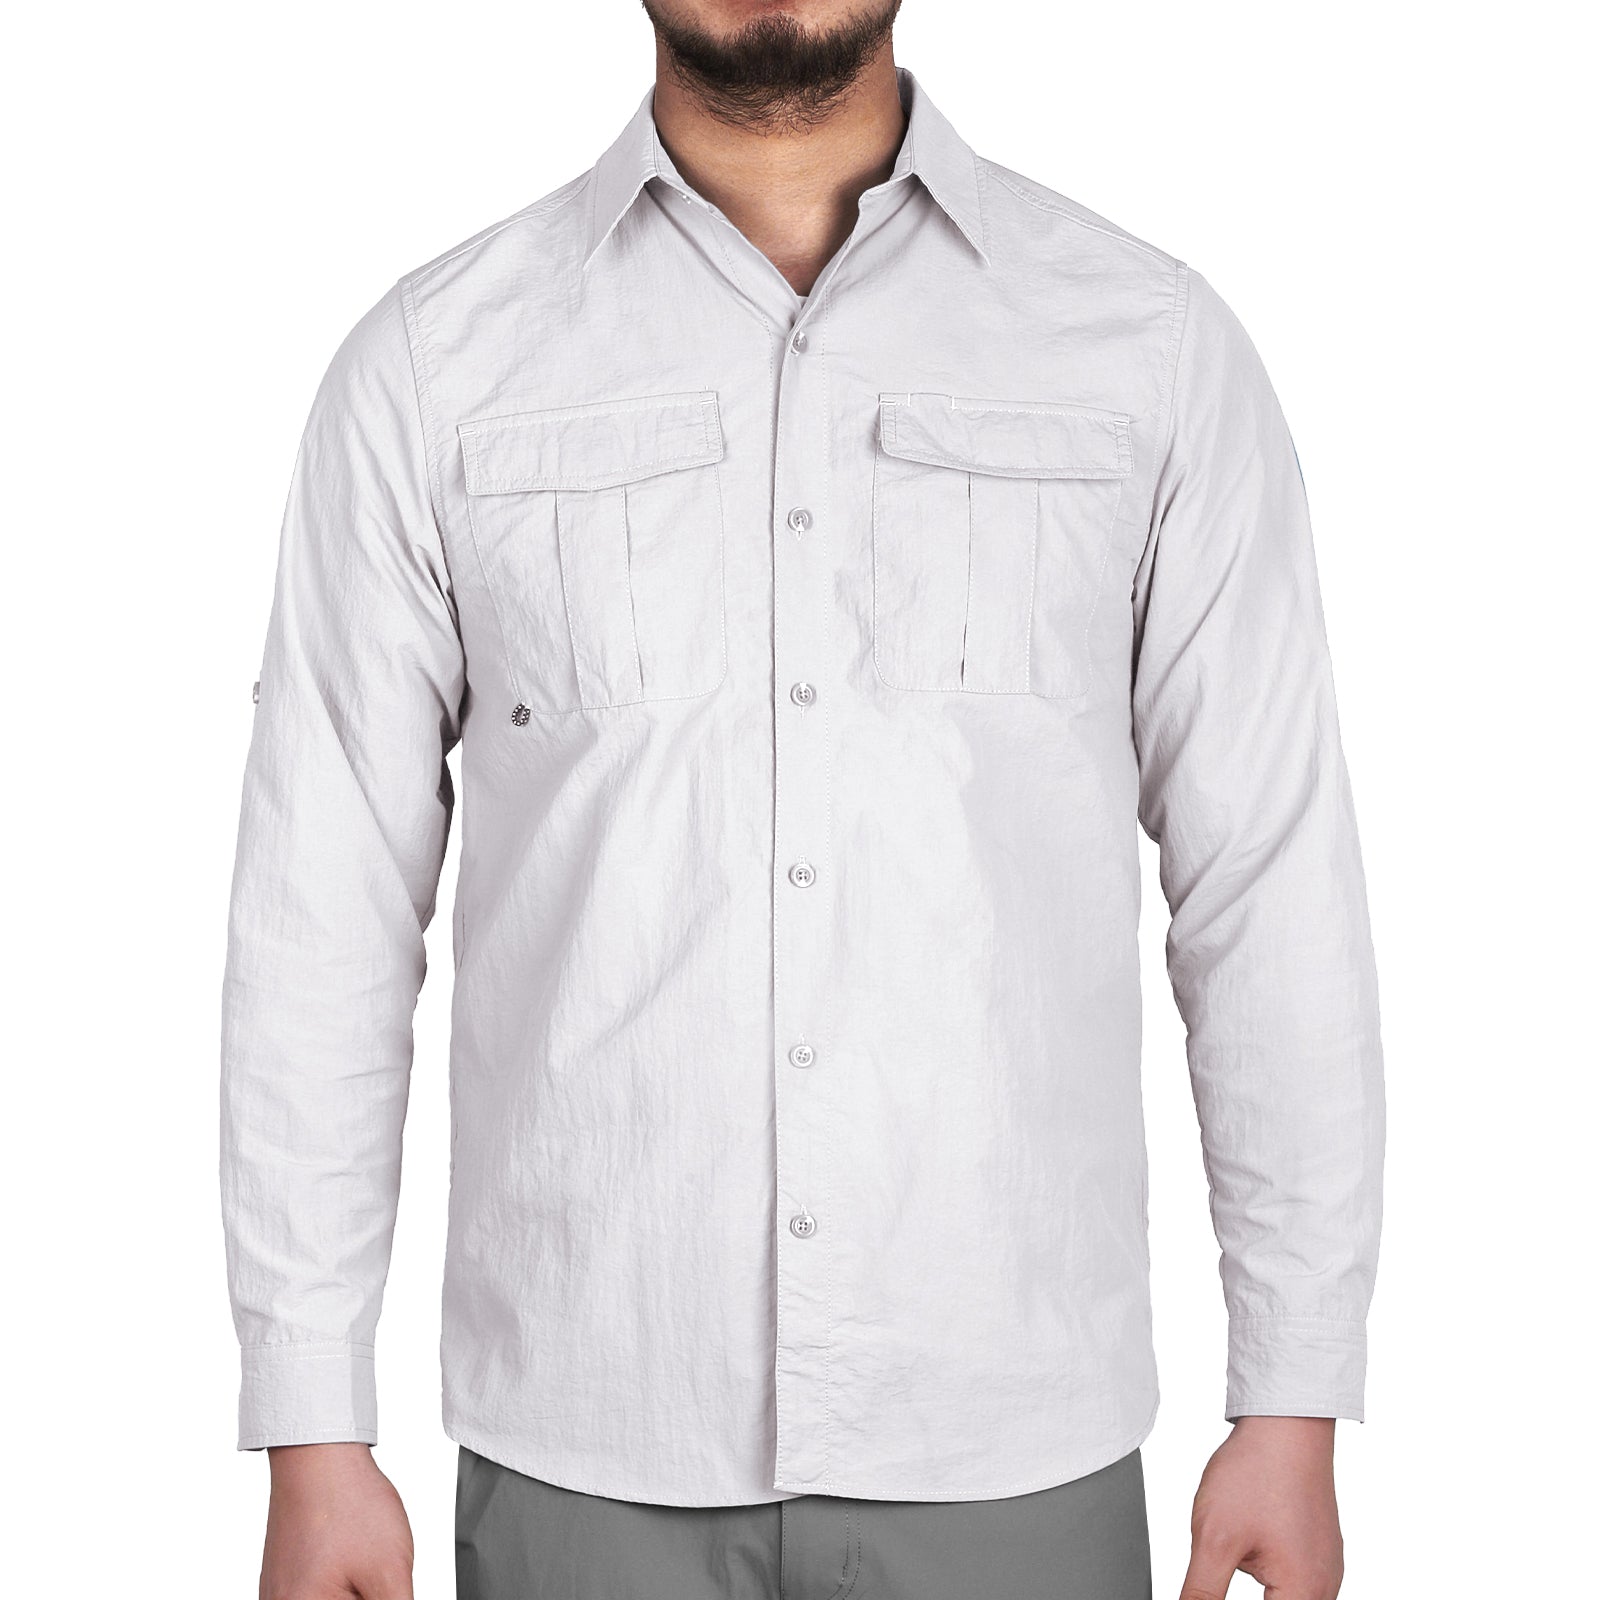 MeetHoo Camiseta estándar para hombre, protección solar UPF 50+